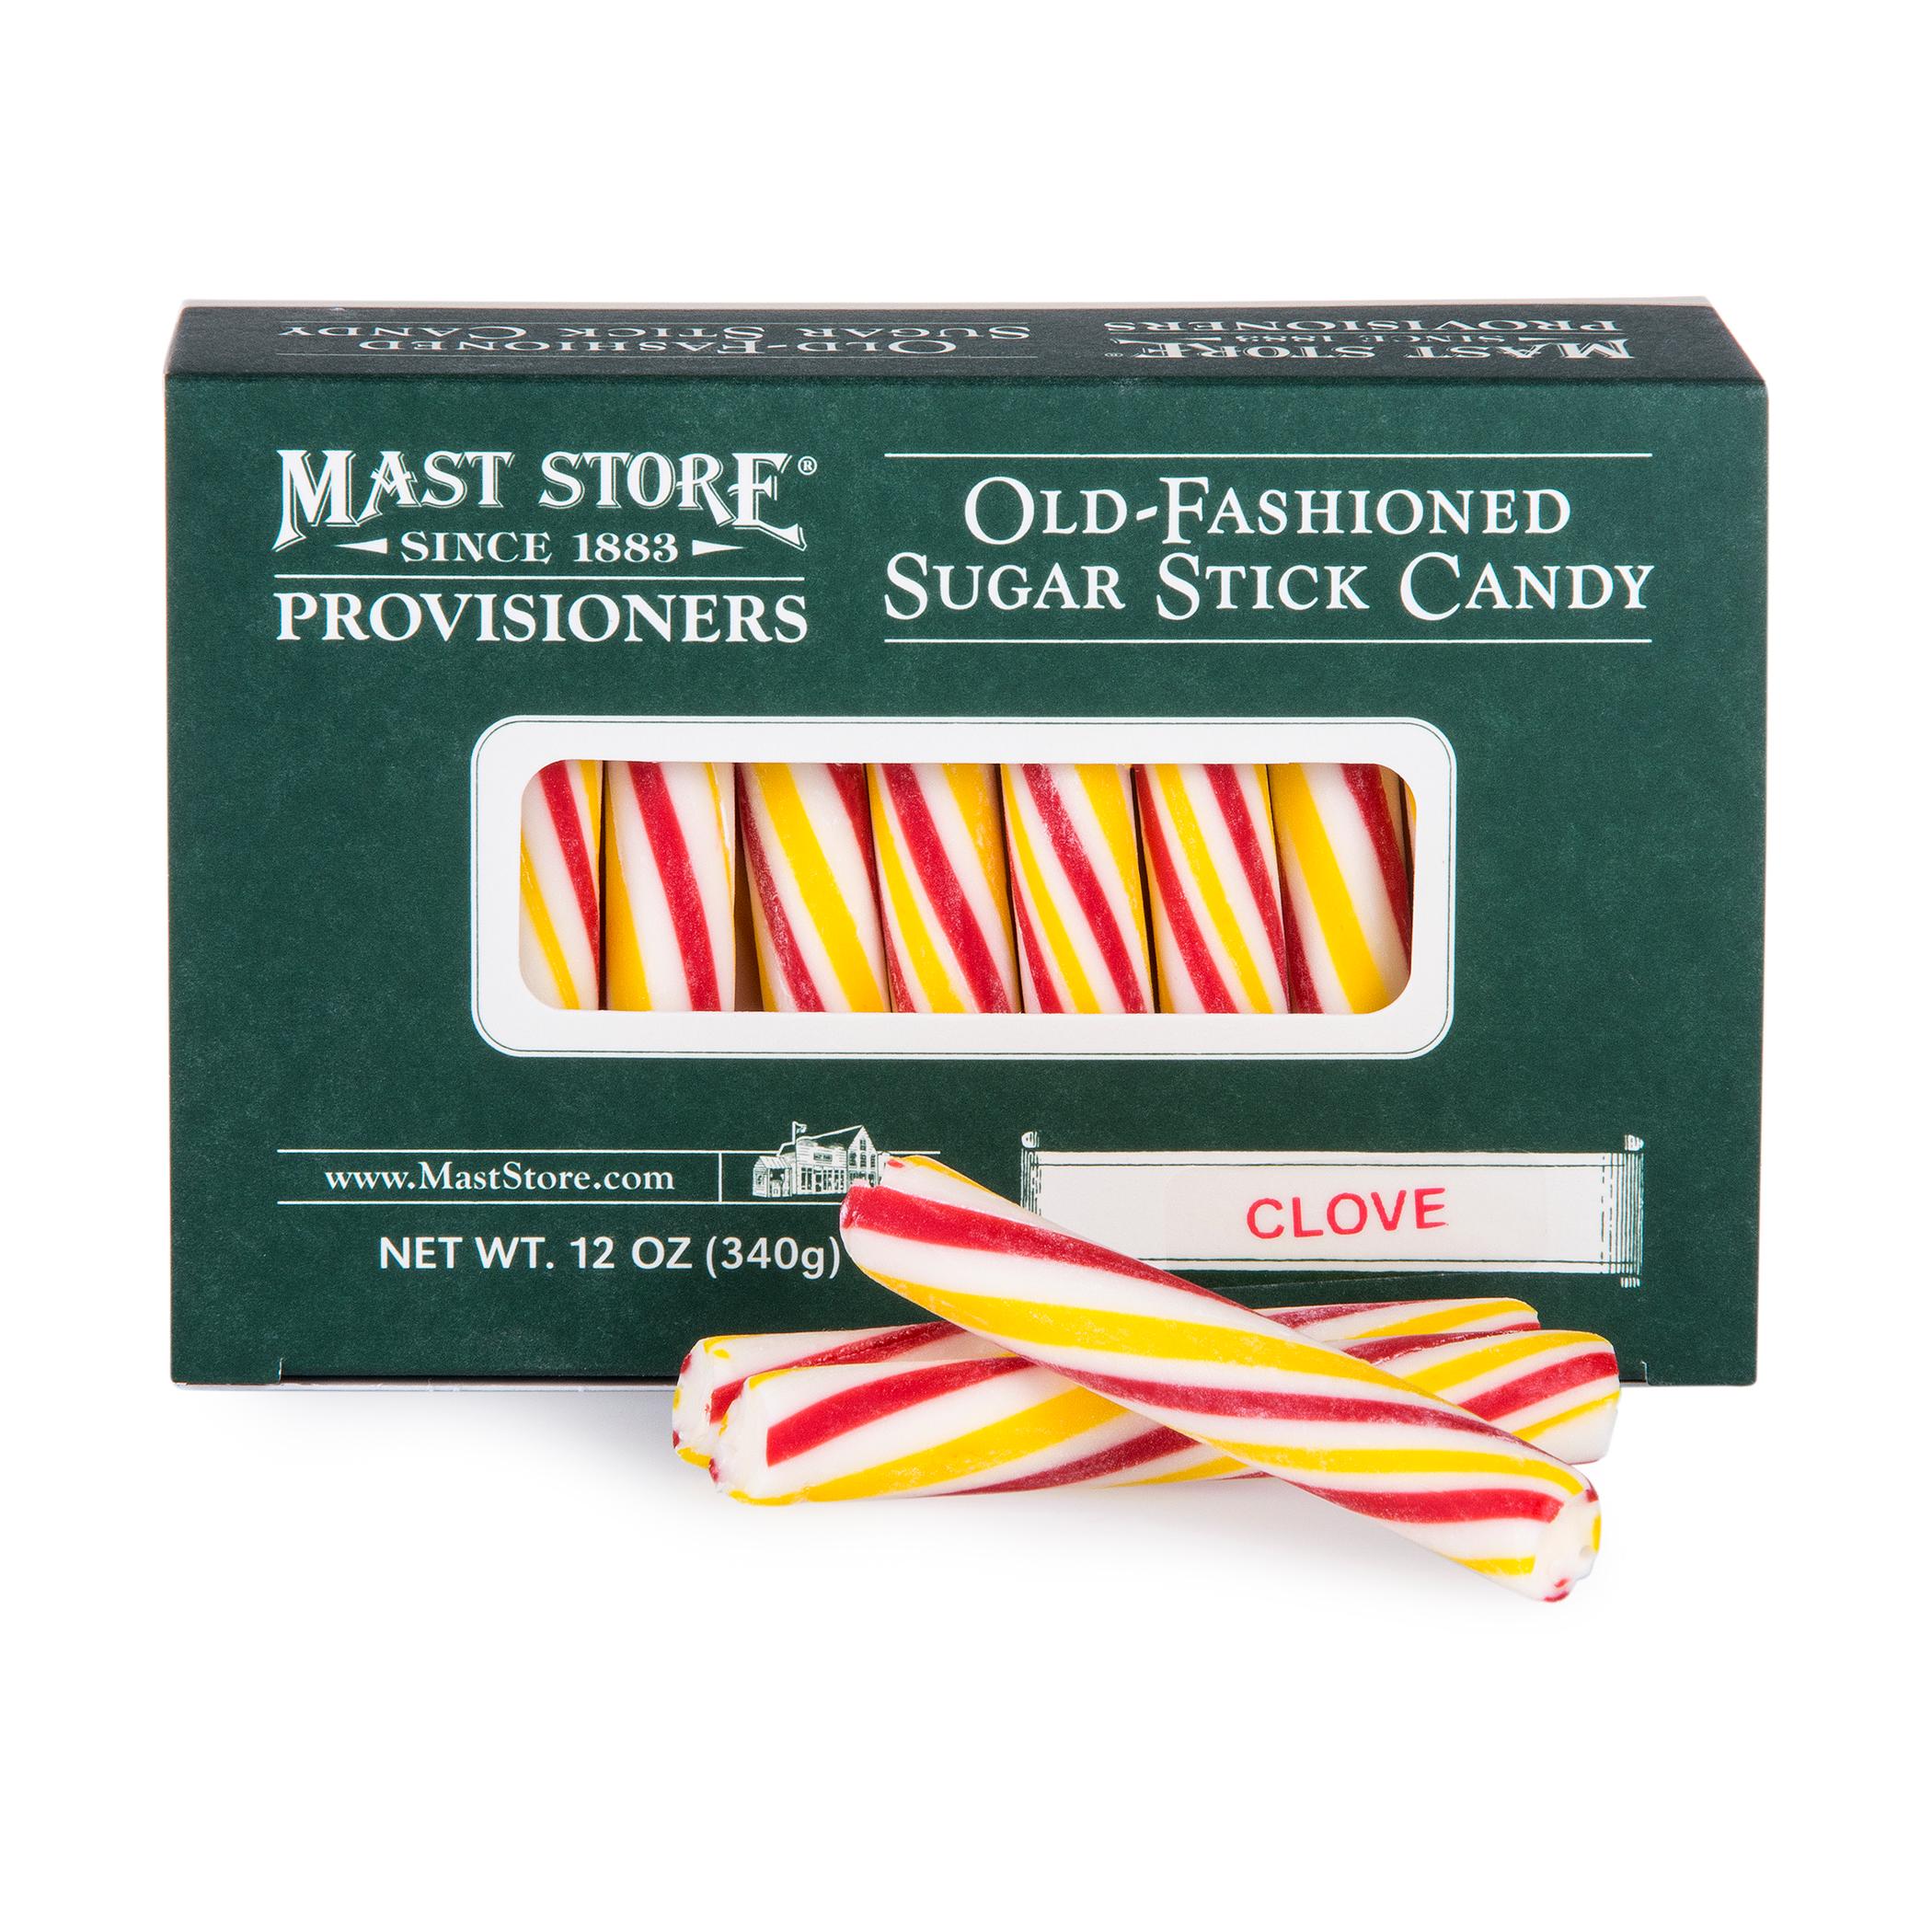  Mast Store Provisioners Clove Old- Fashioned Sugar Stick Candy